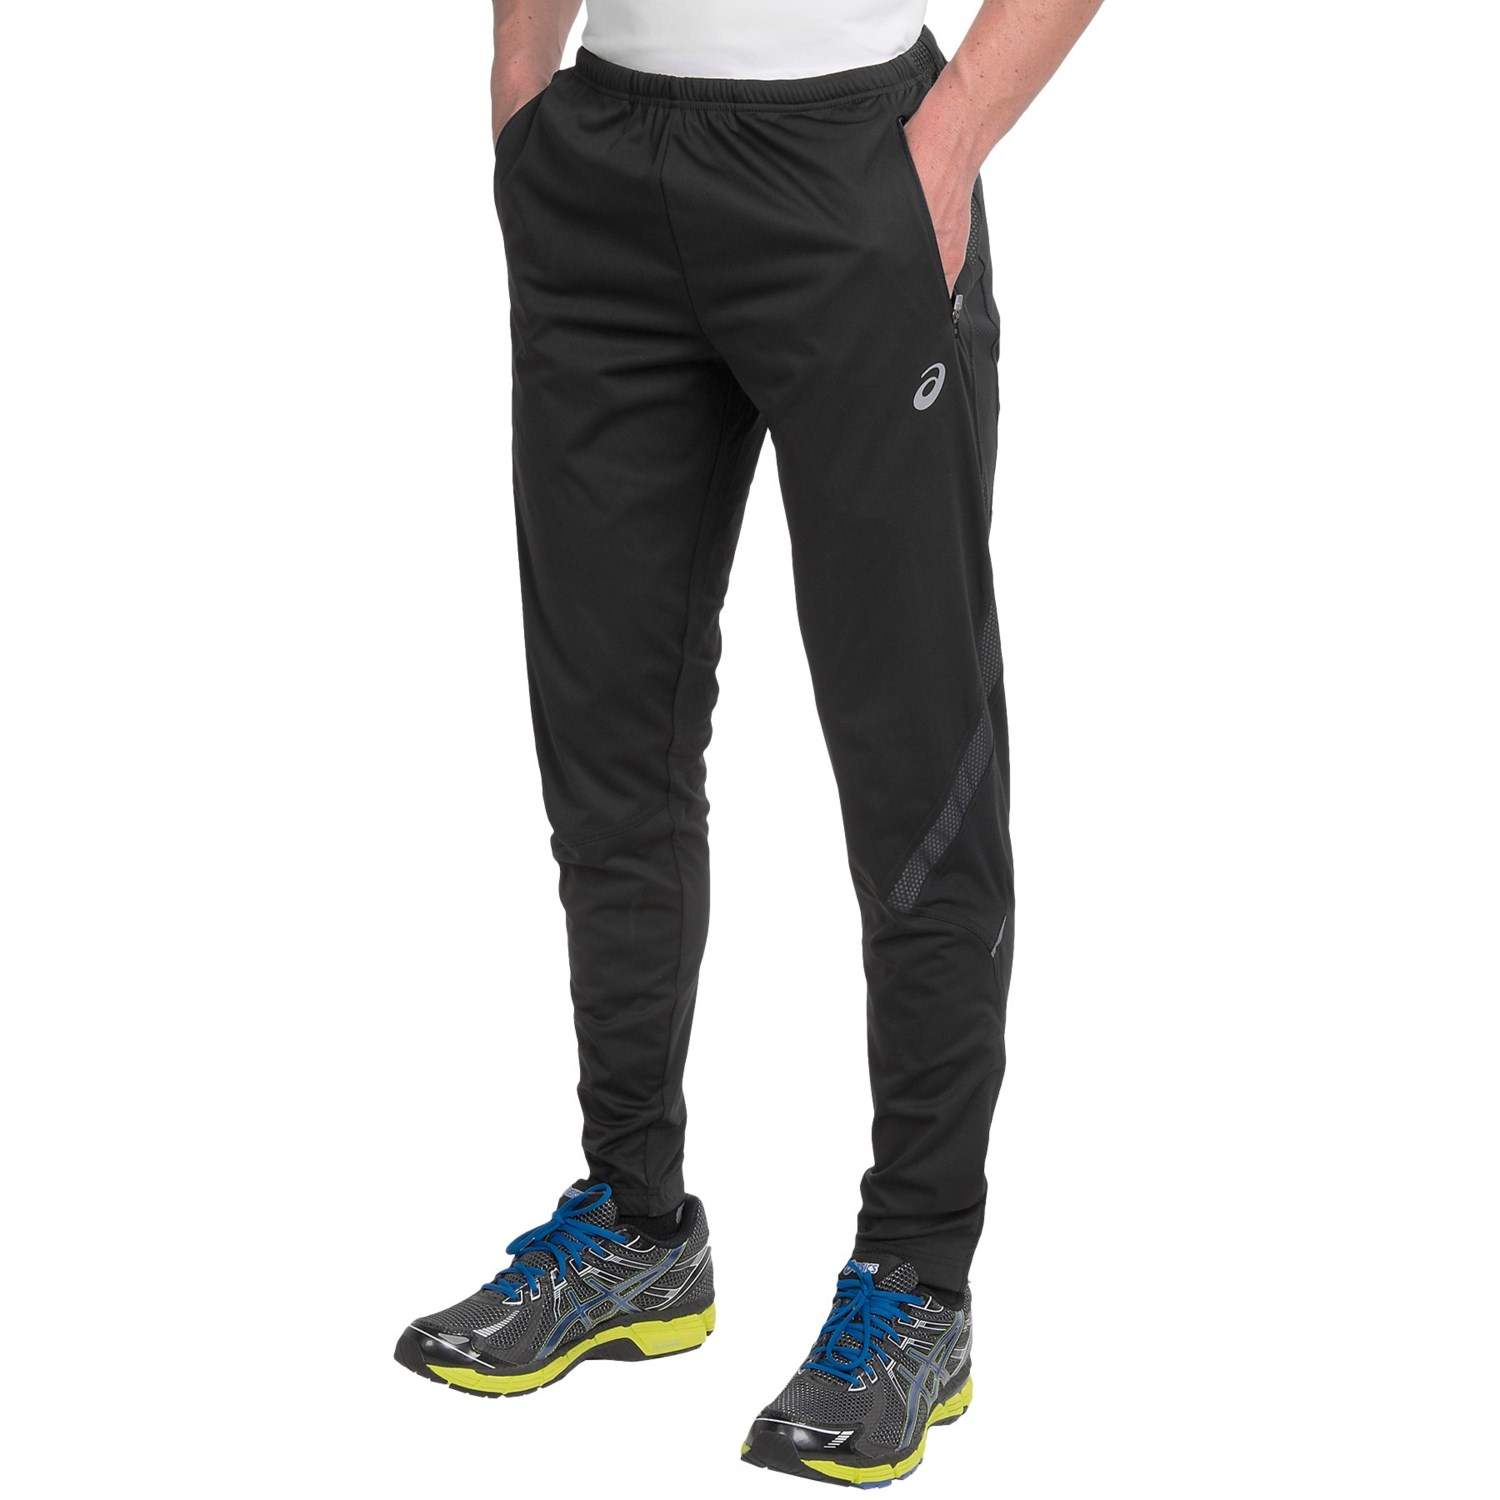 ASICS High-Performance Run Pants (For Men) 9519G - Save 60%